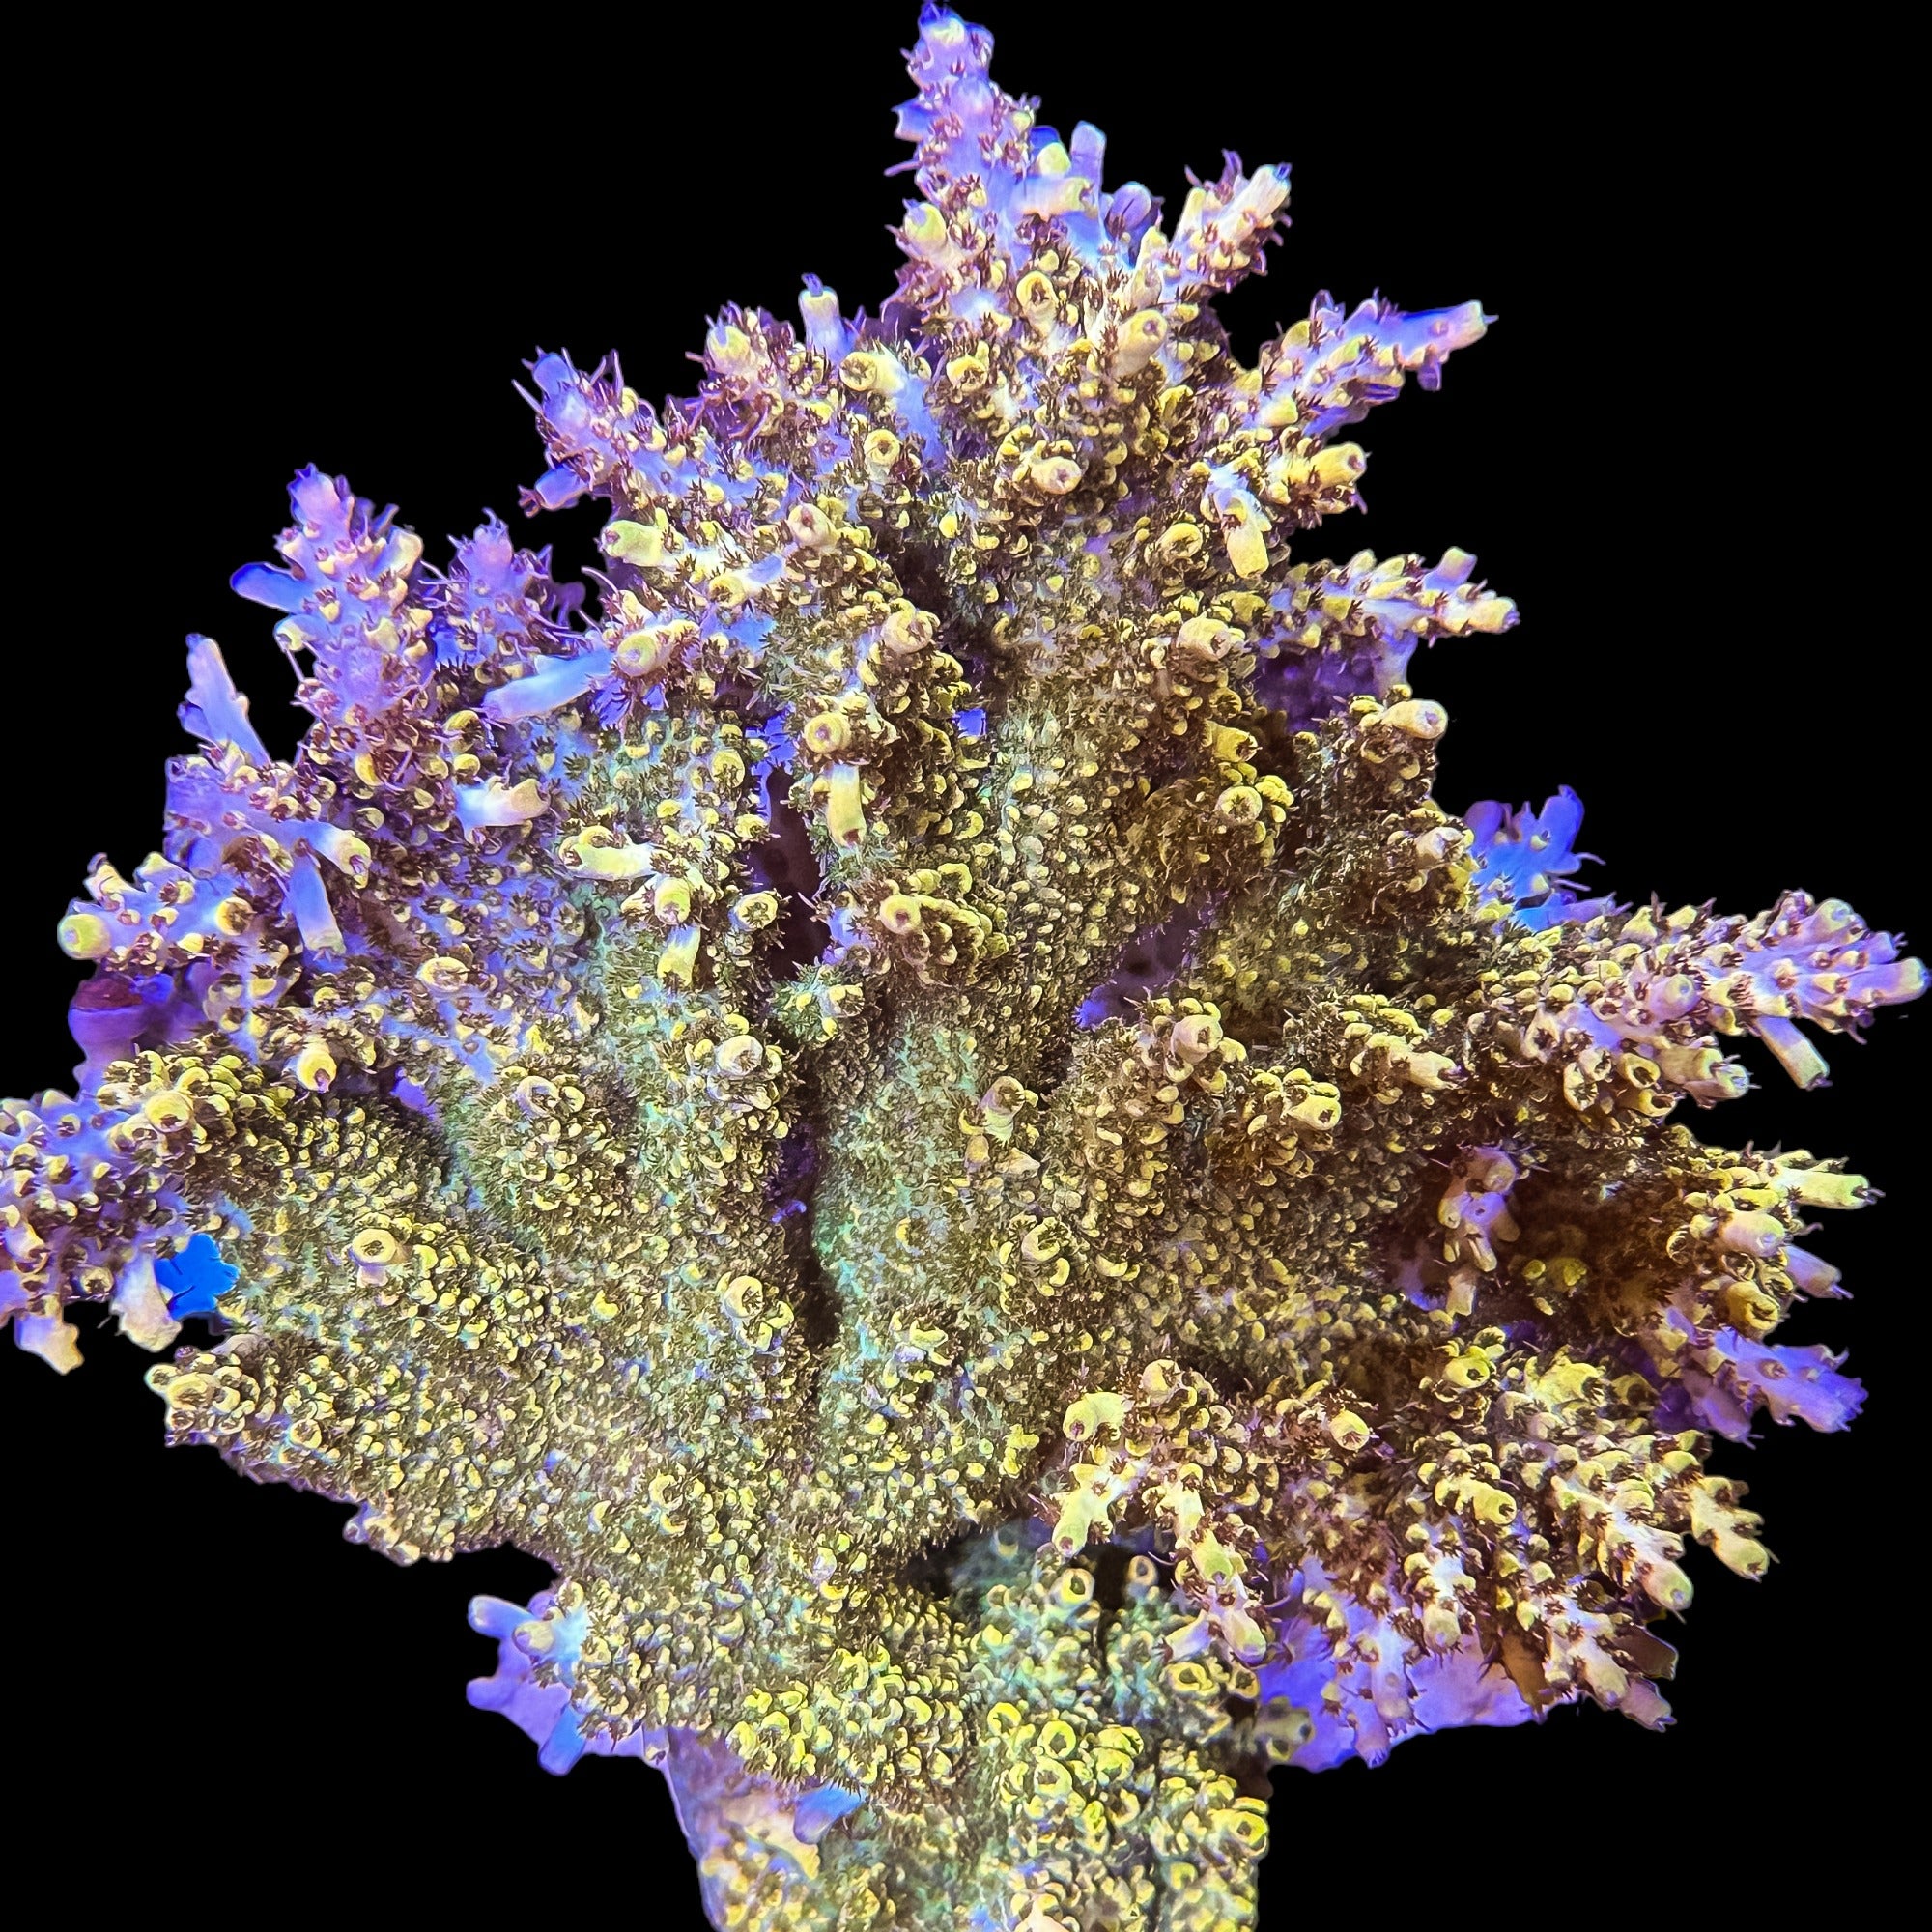 Acropora Coral Canada - Frag Garage